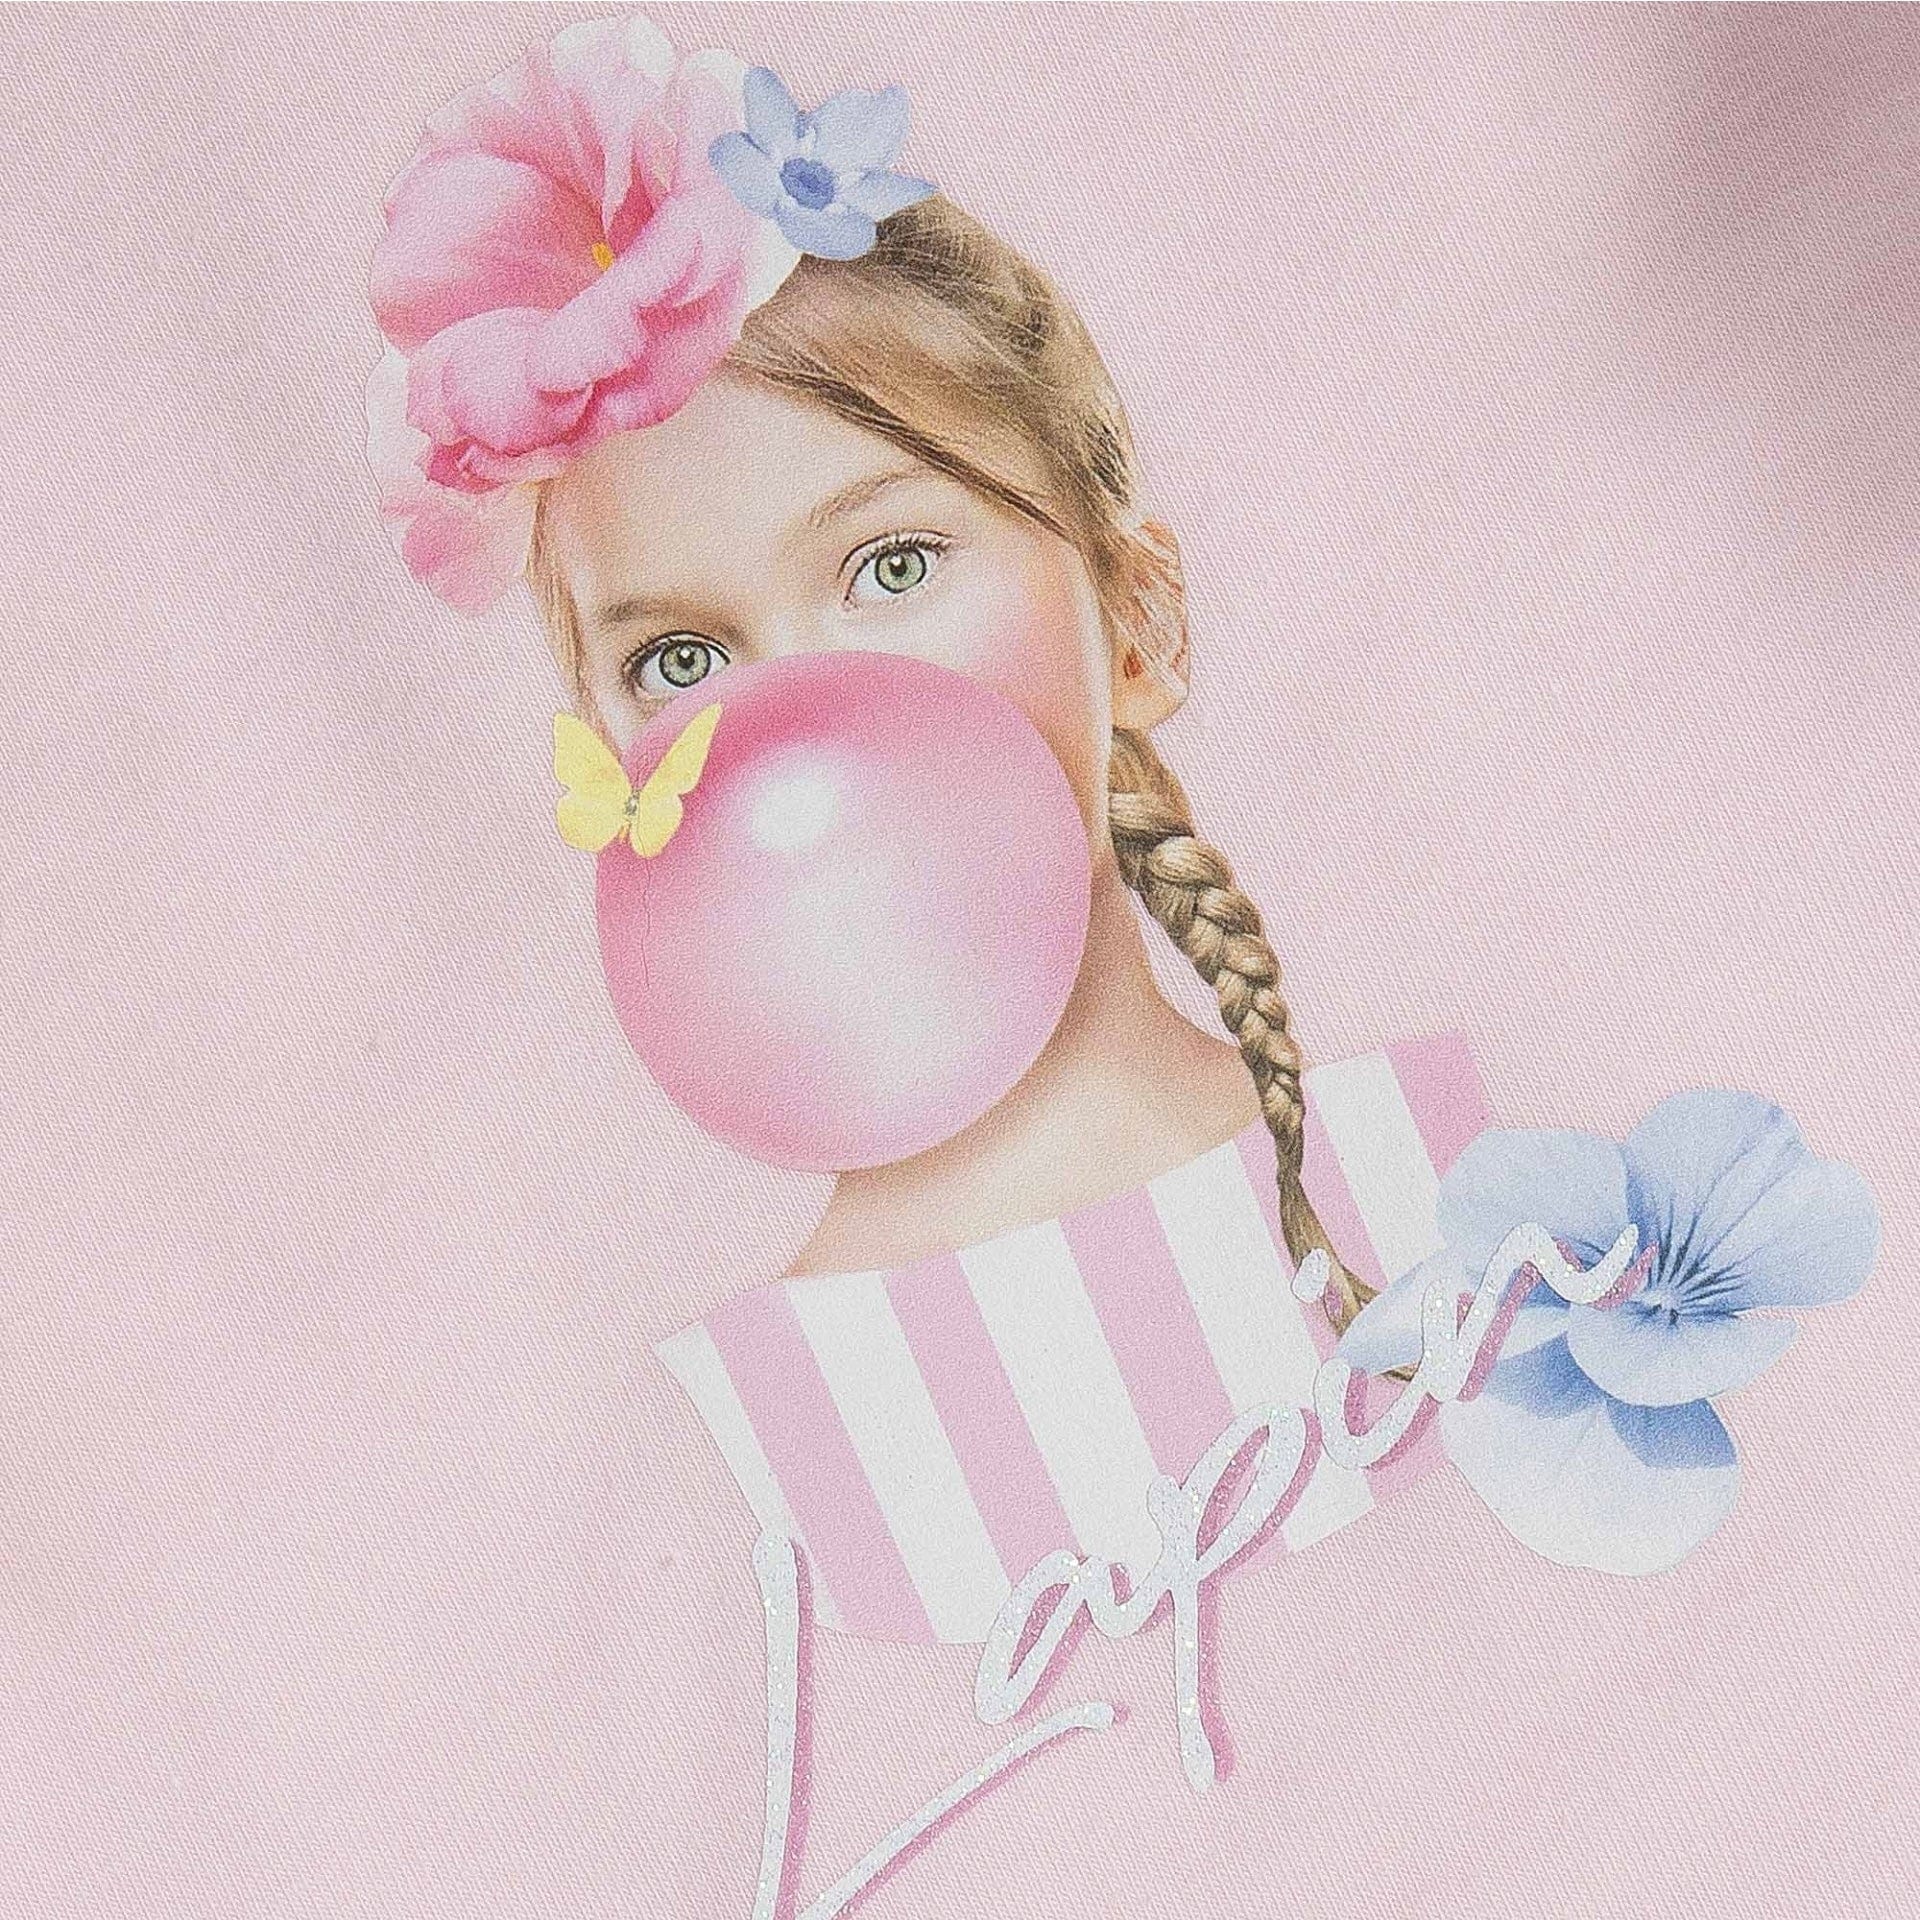 LAPIN HOUSE -Stripe Bubble Gum Girl Skirt Set - Pink